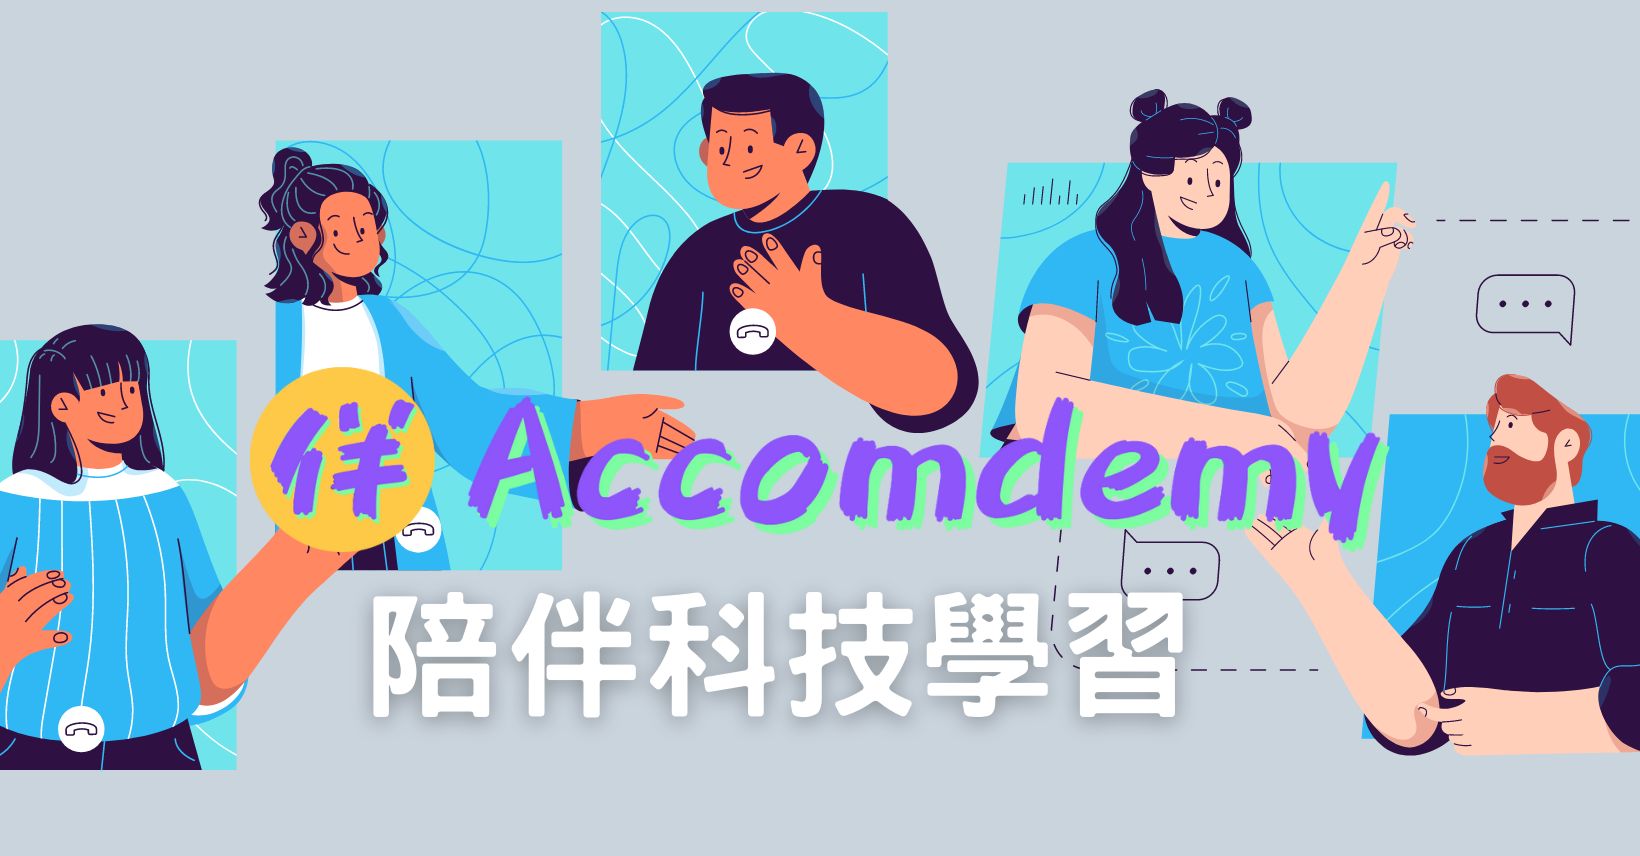 header image for Accomdemy = Accompany + Academy